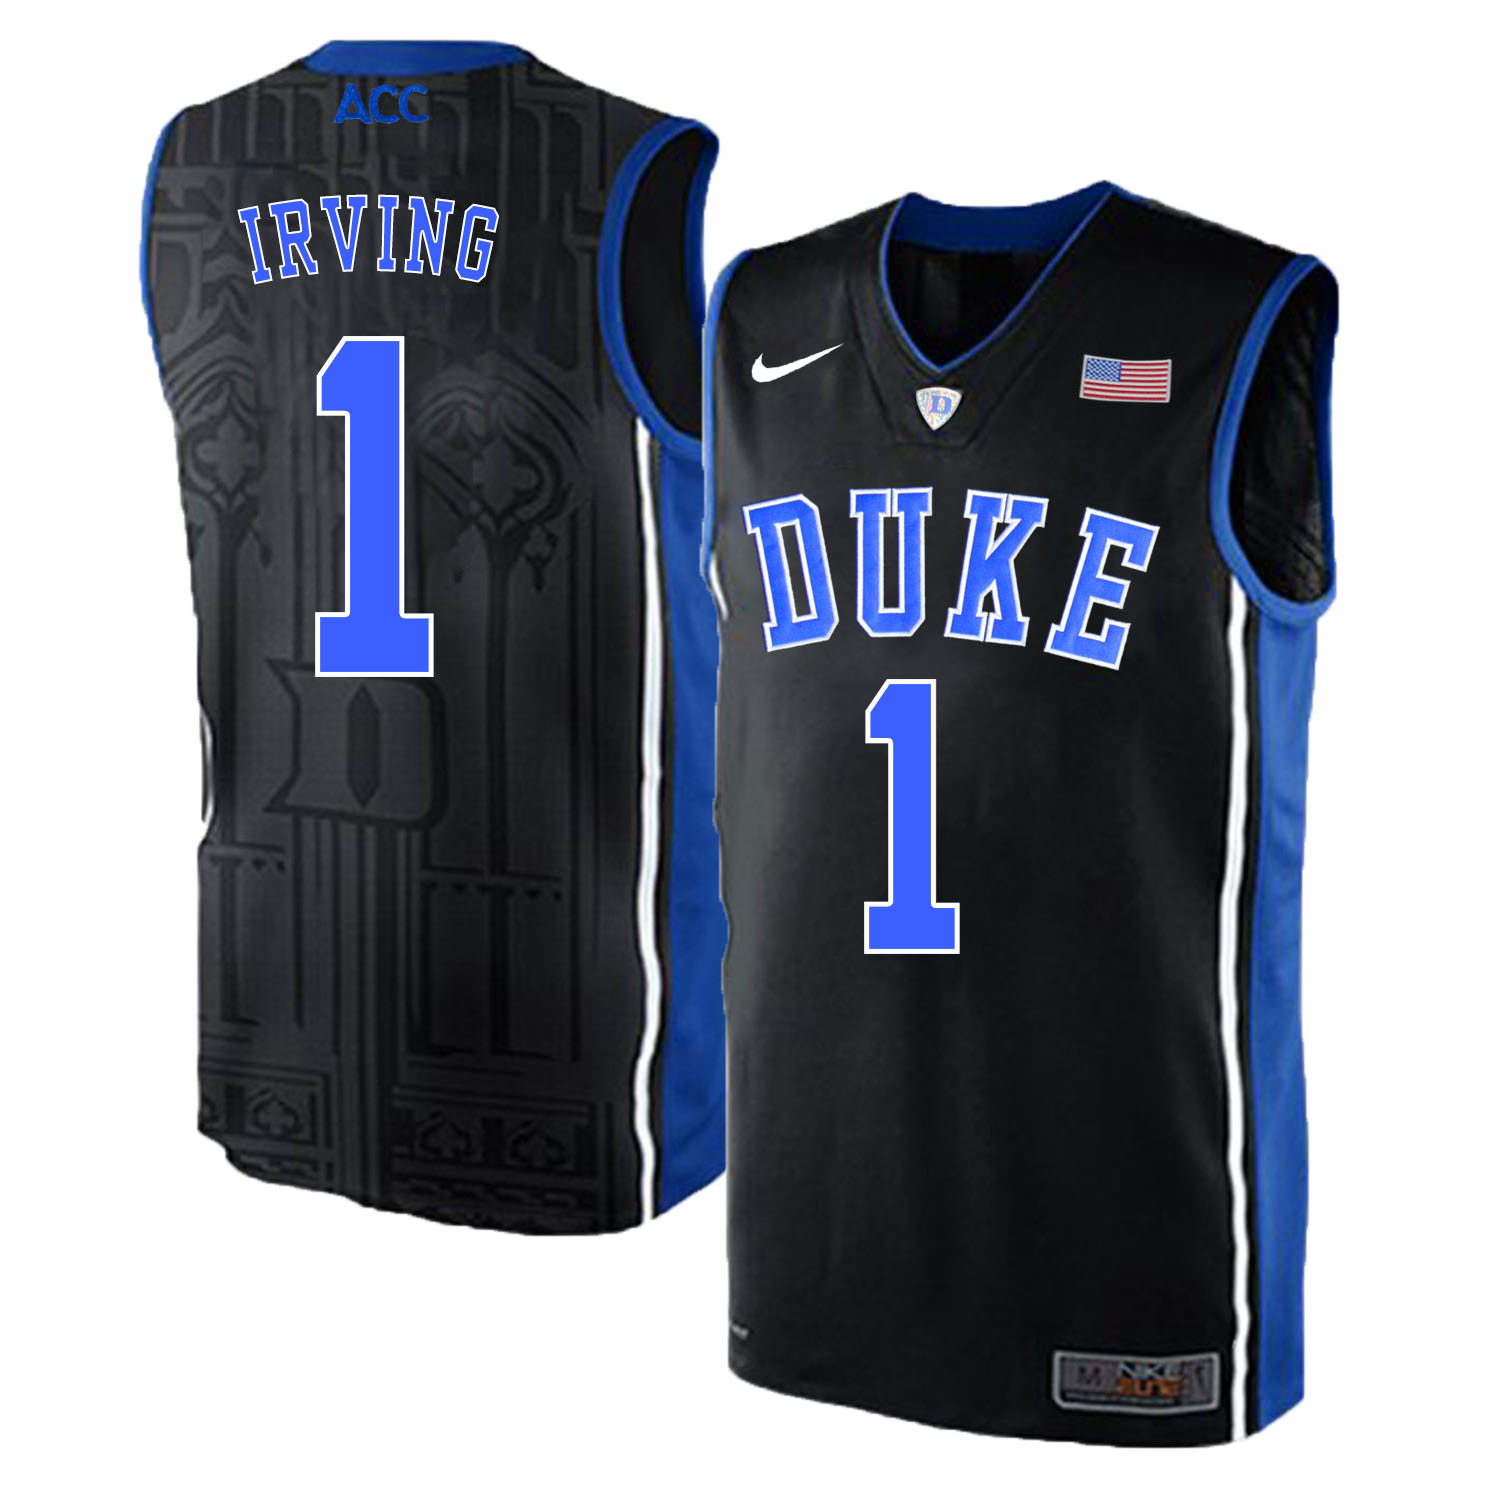 Duke Blue Devils 1 Kyrie Irving Black Elite Nike College Basketabll Jersey